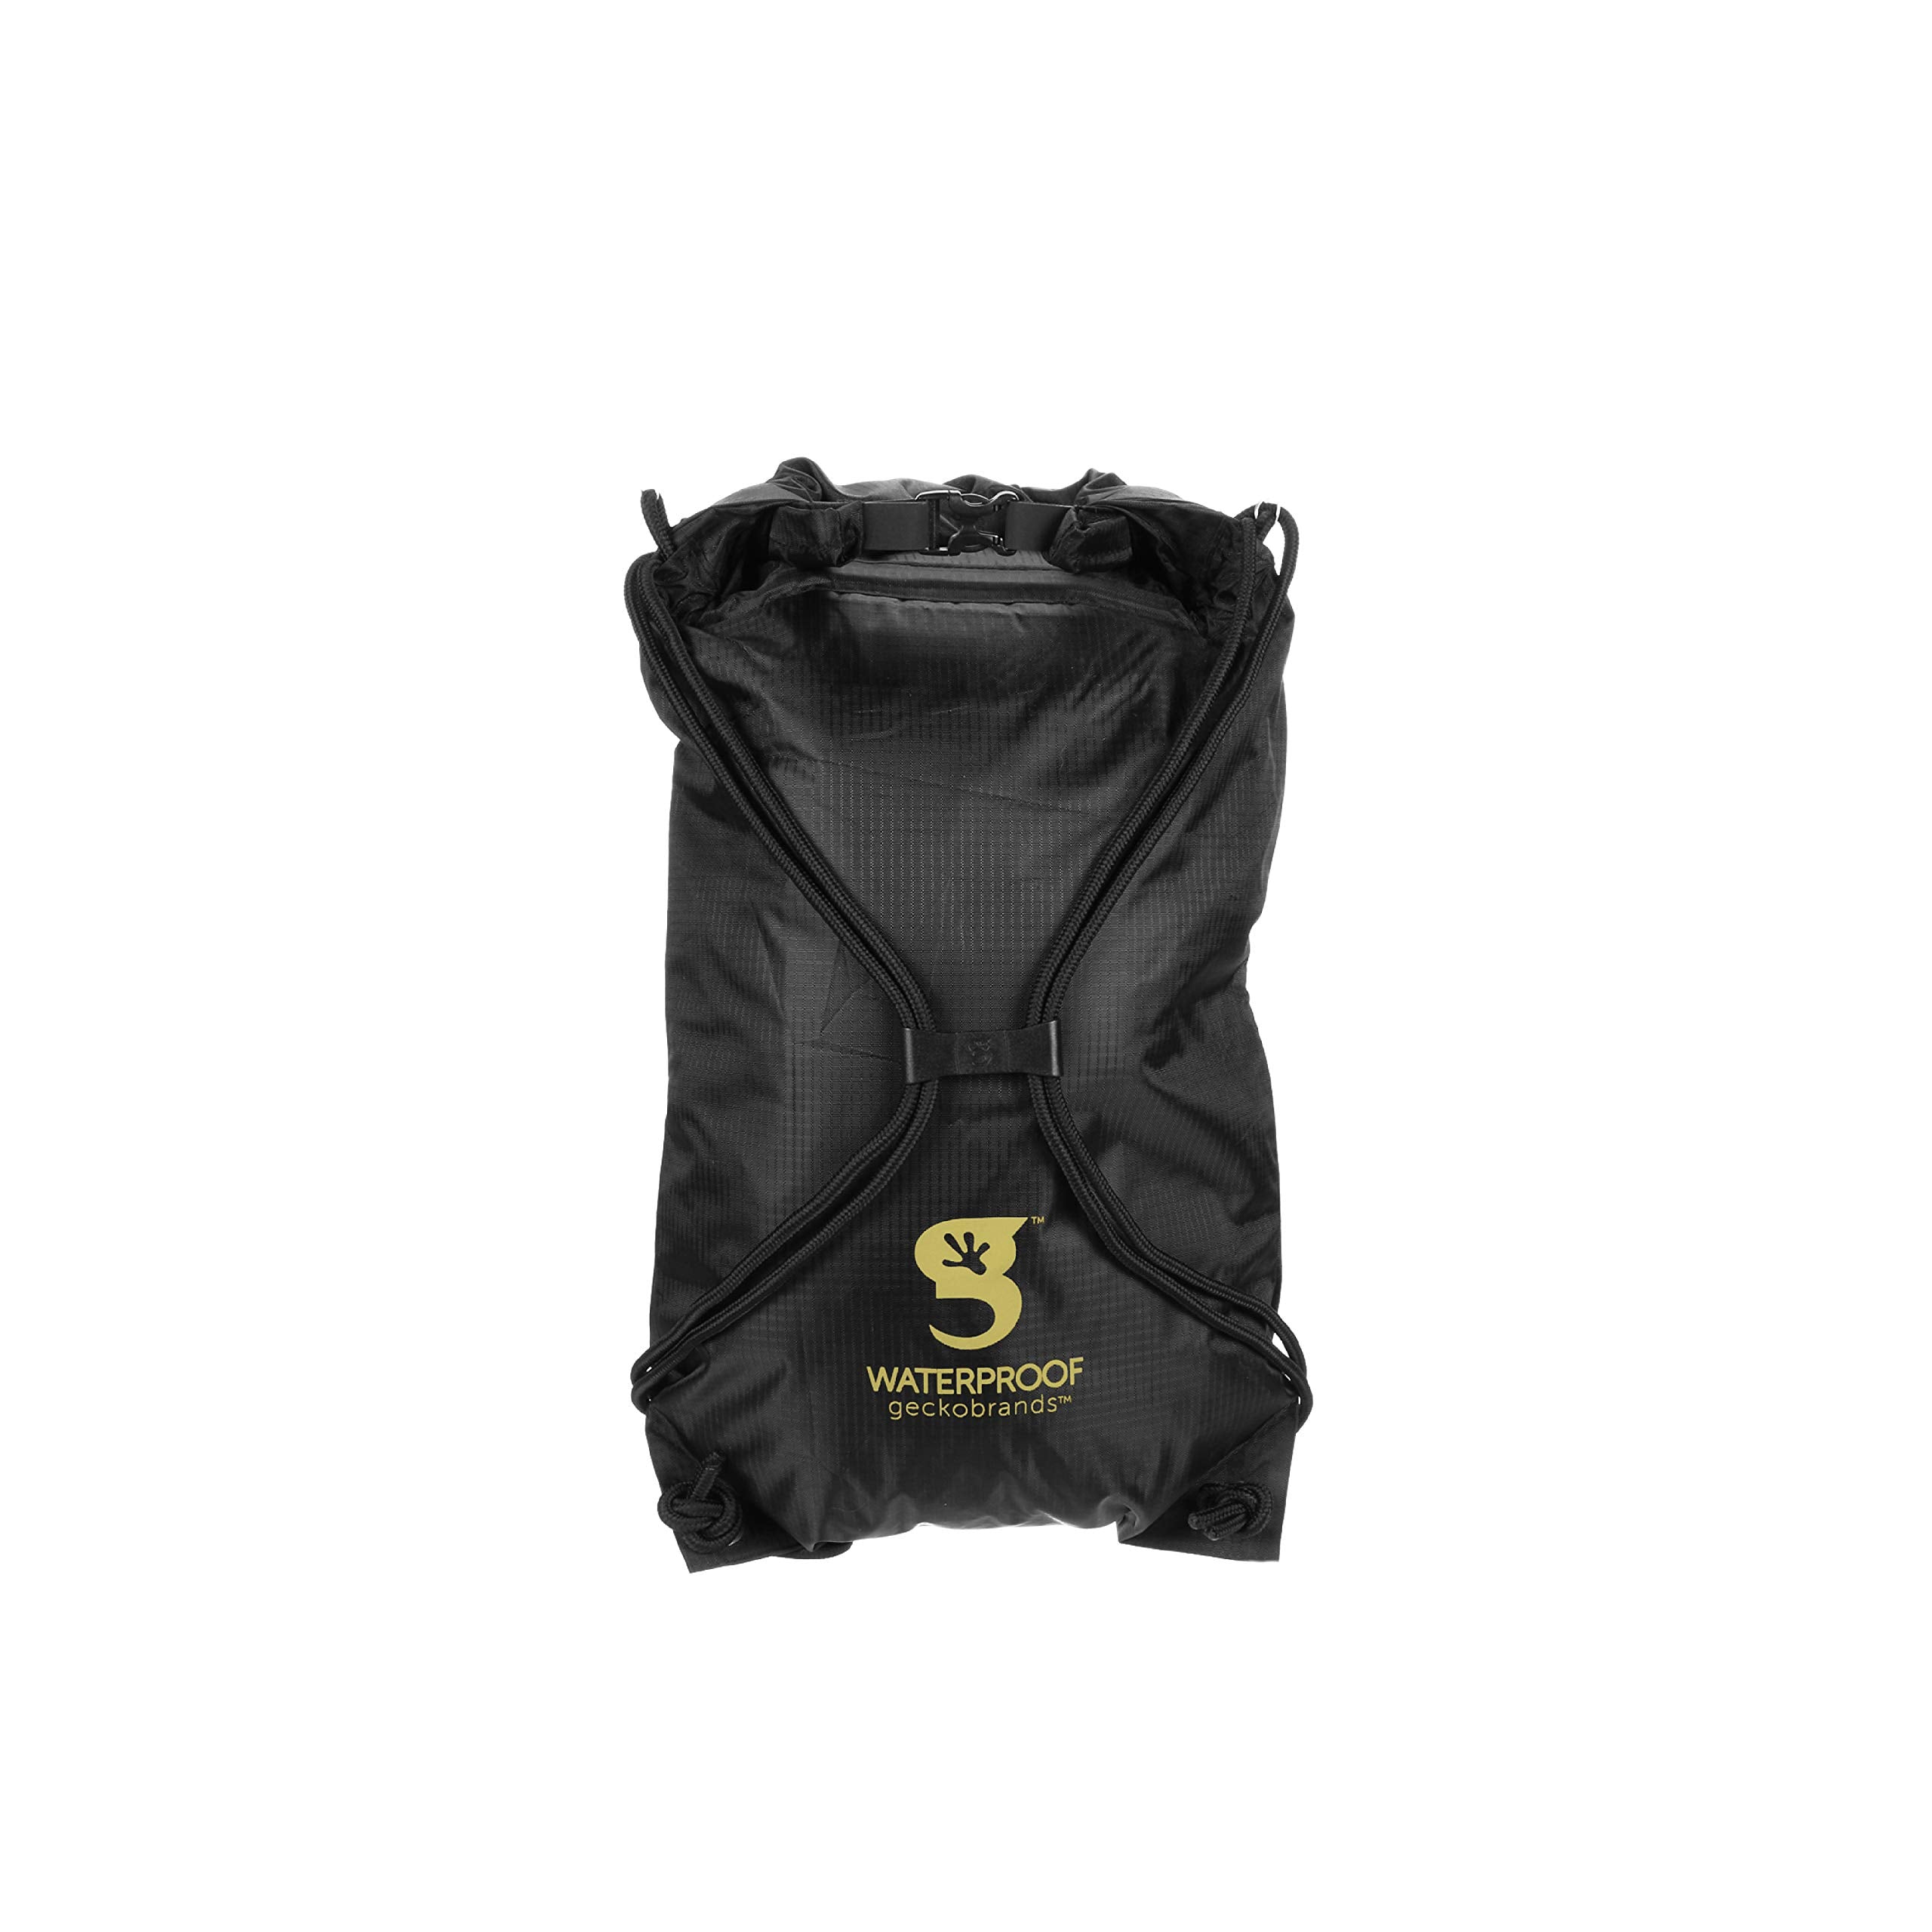 Geckobrands Waterproof Drawstring Backpack, 57% OFF